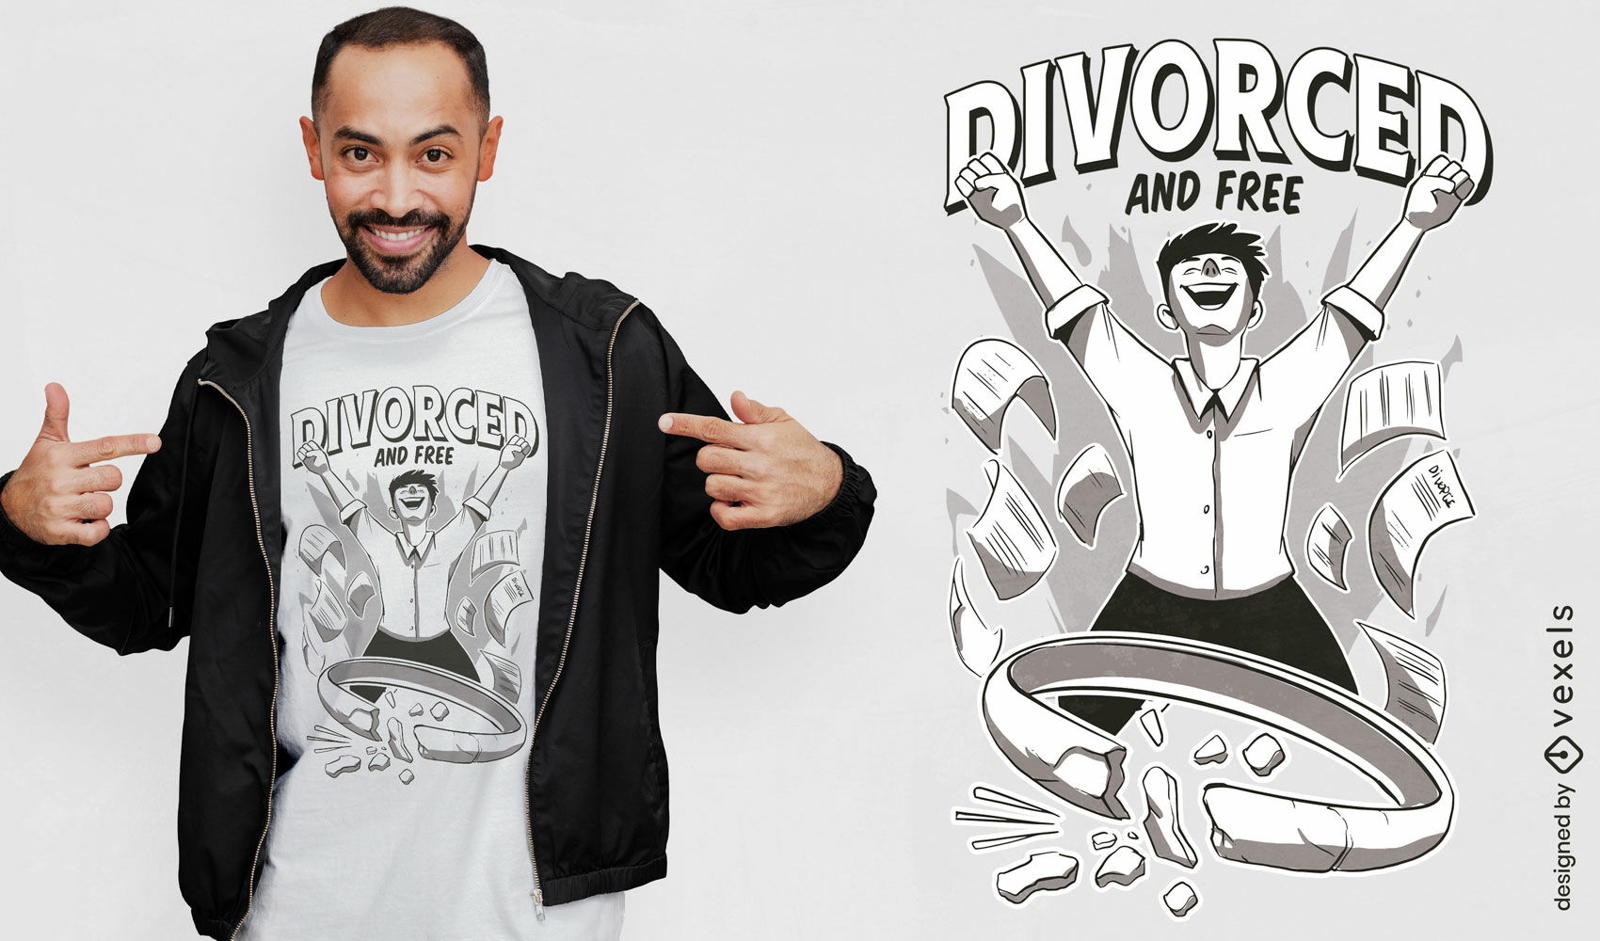 Happy divorced free man t-shirt design